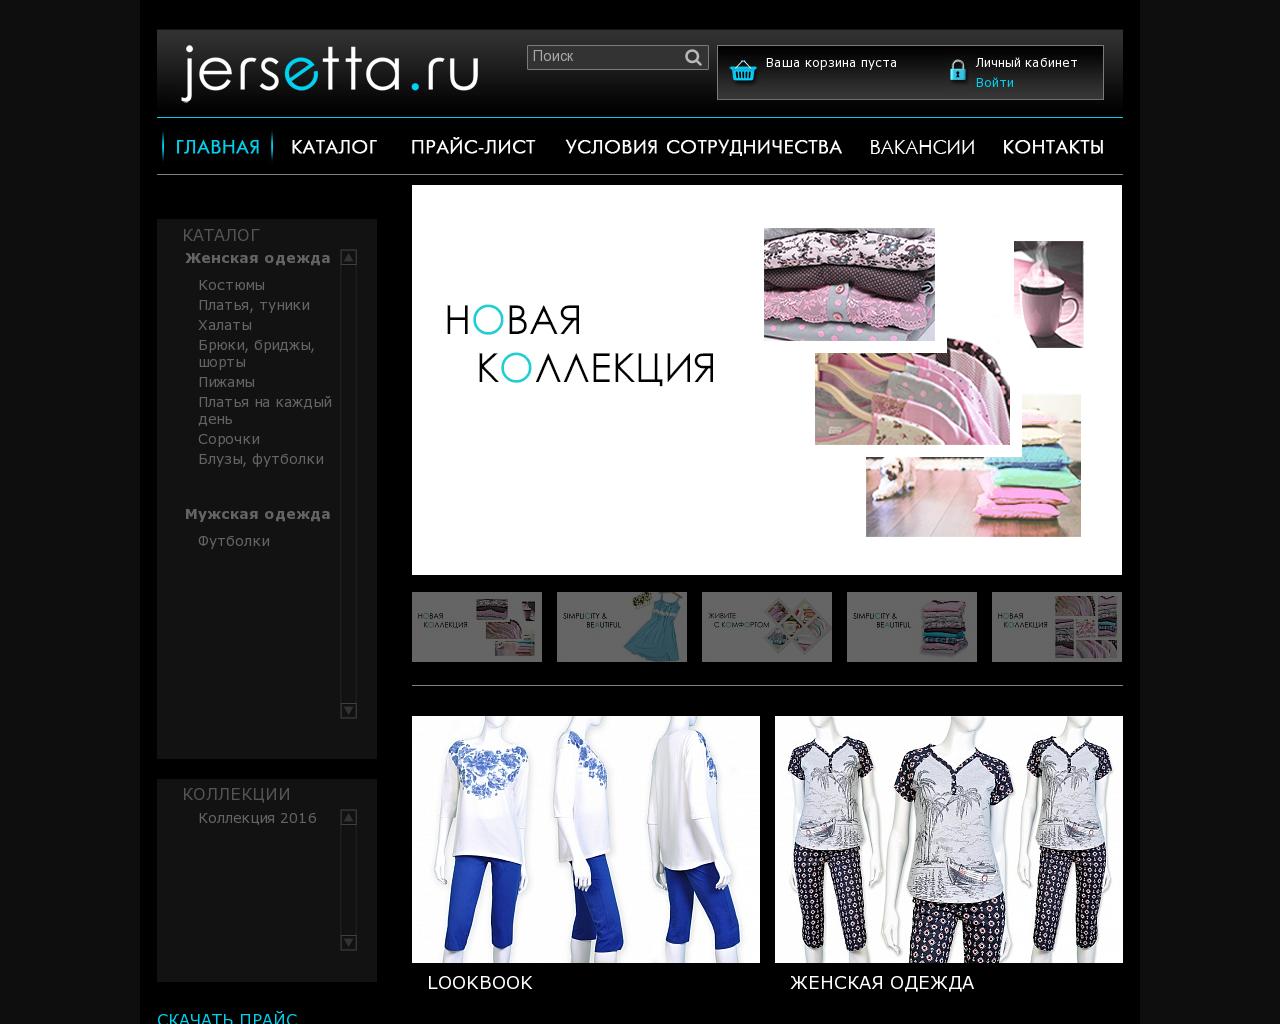 Изображение сайта jersetta.ru в разрешении 1280x1024